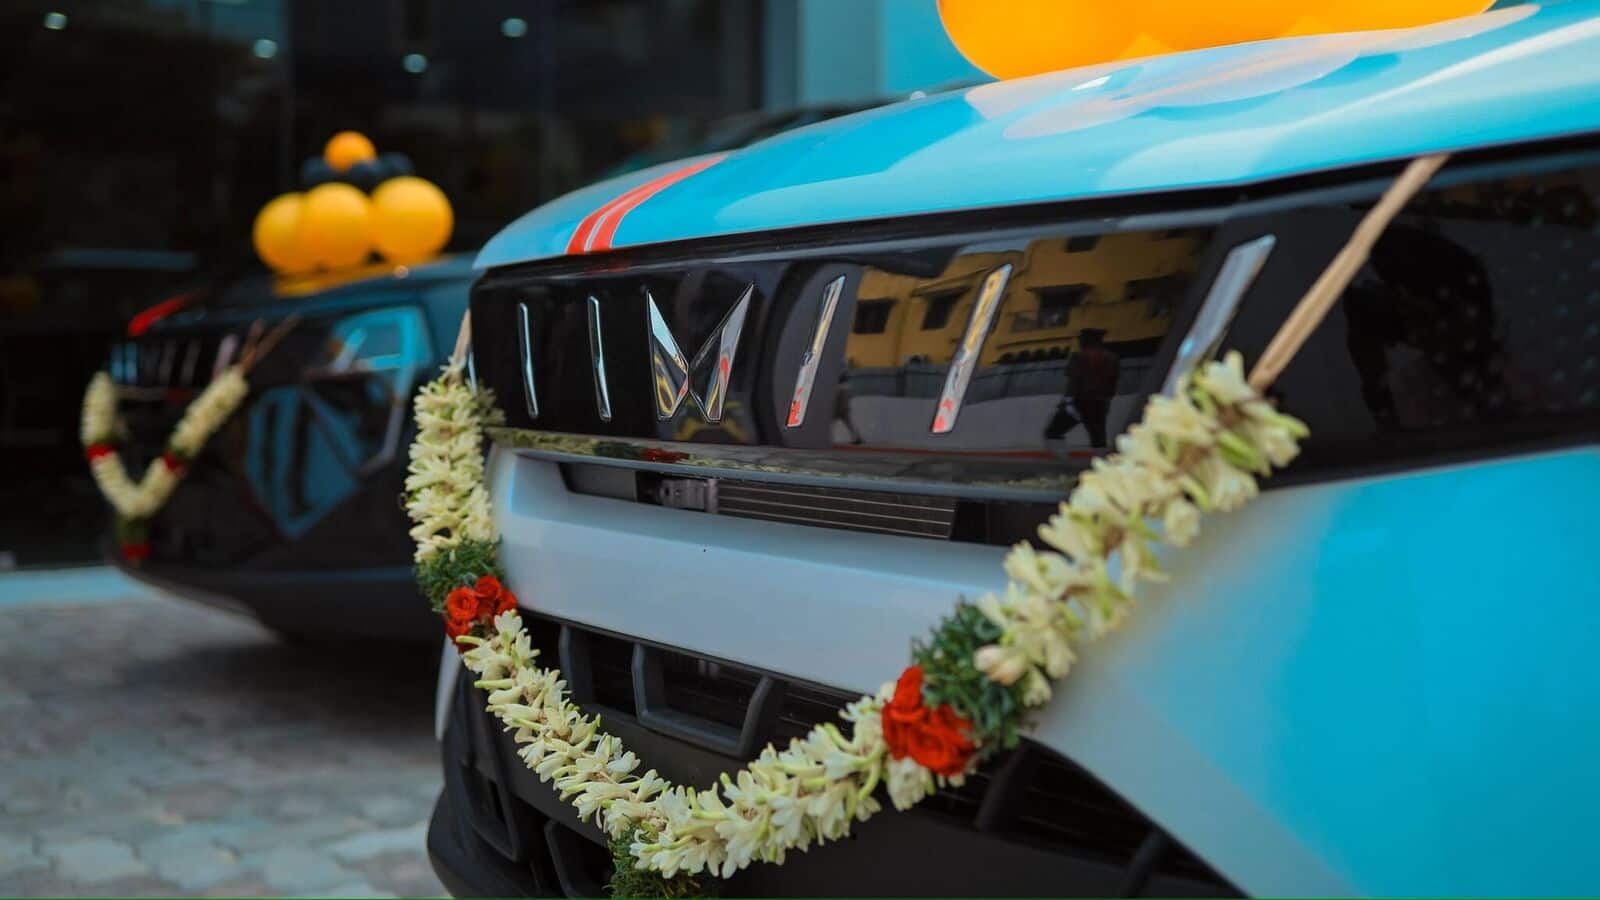 Mahindra reports 31% growth in car sales this May